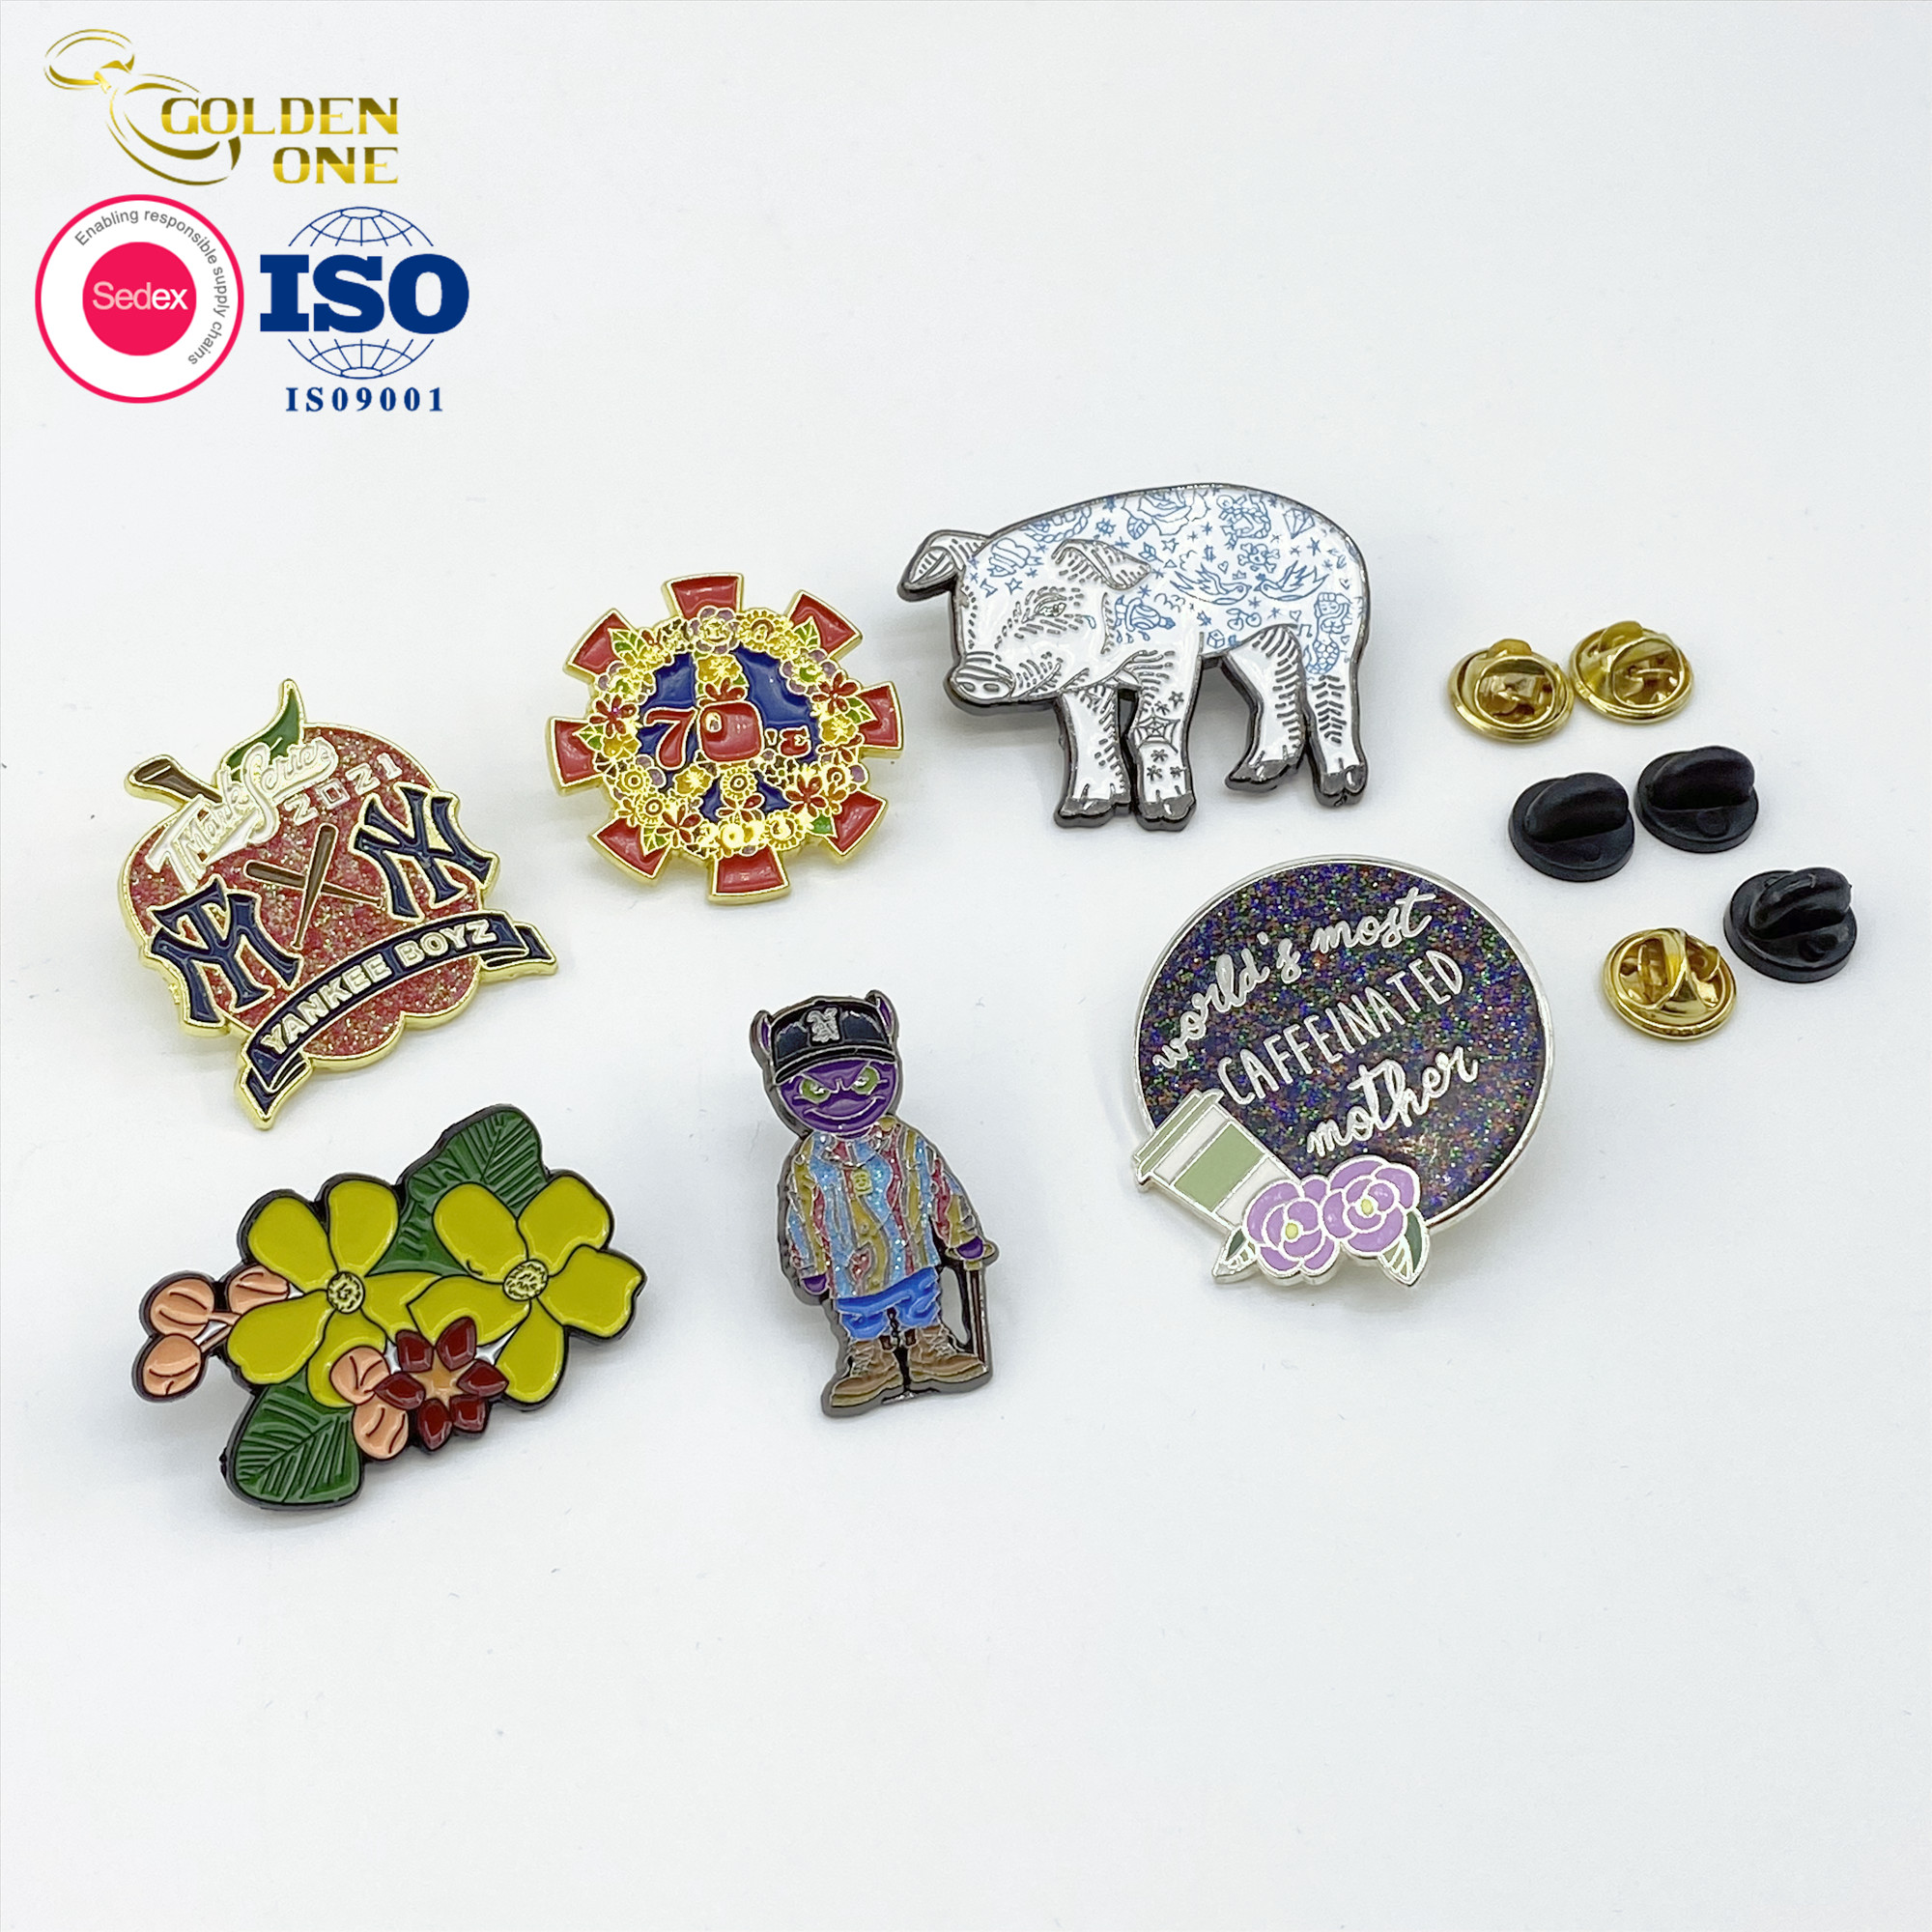 Hot Sale USA Art Anime Custom Pins Logo Badge shiny Gold Plated Metal Pin Cute Soft Enamel Lapel Pin with Box